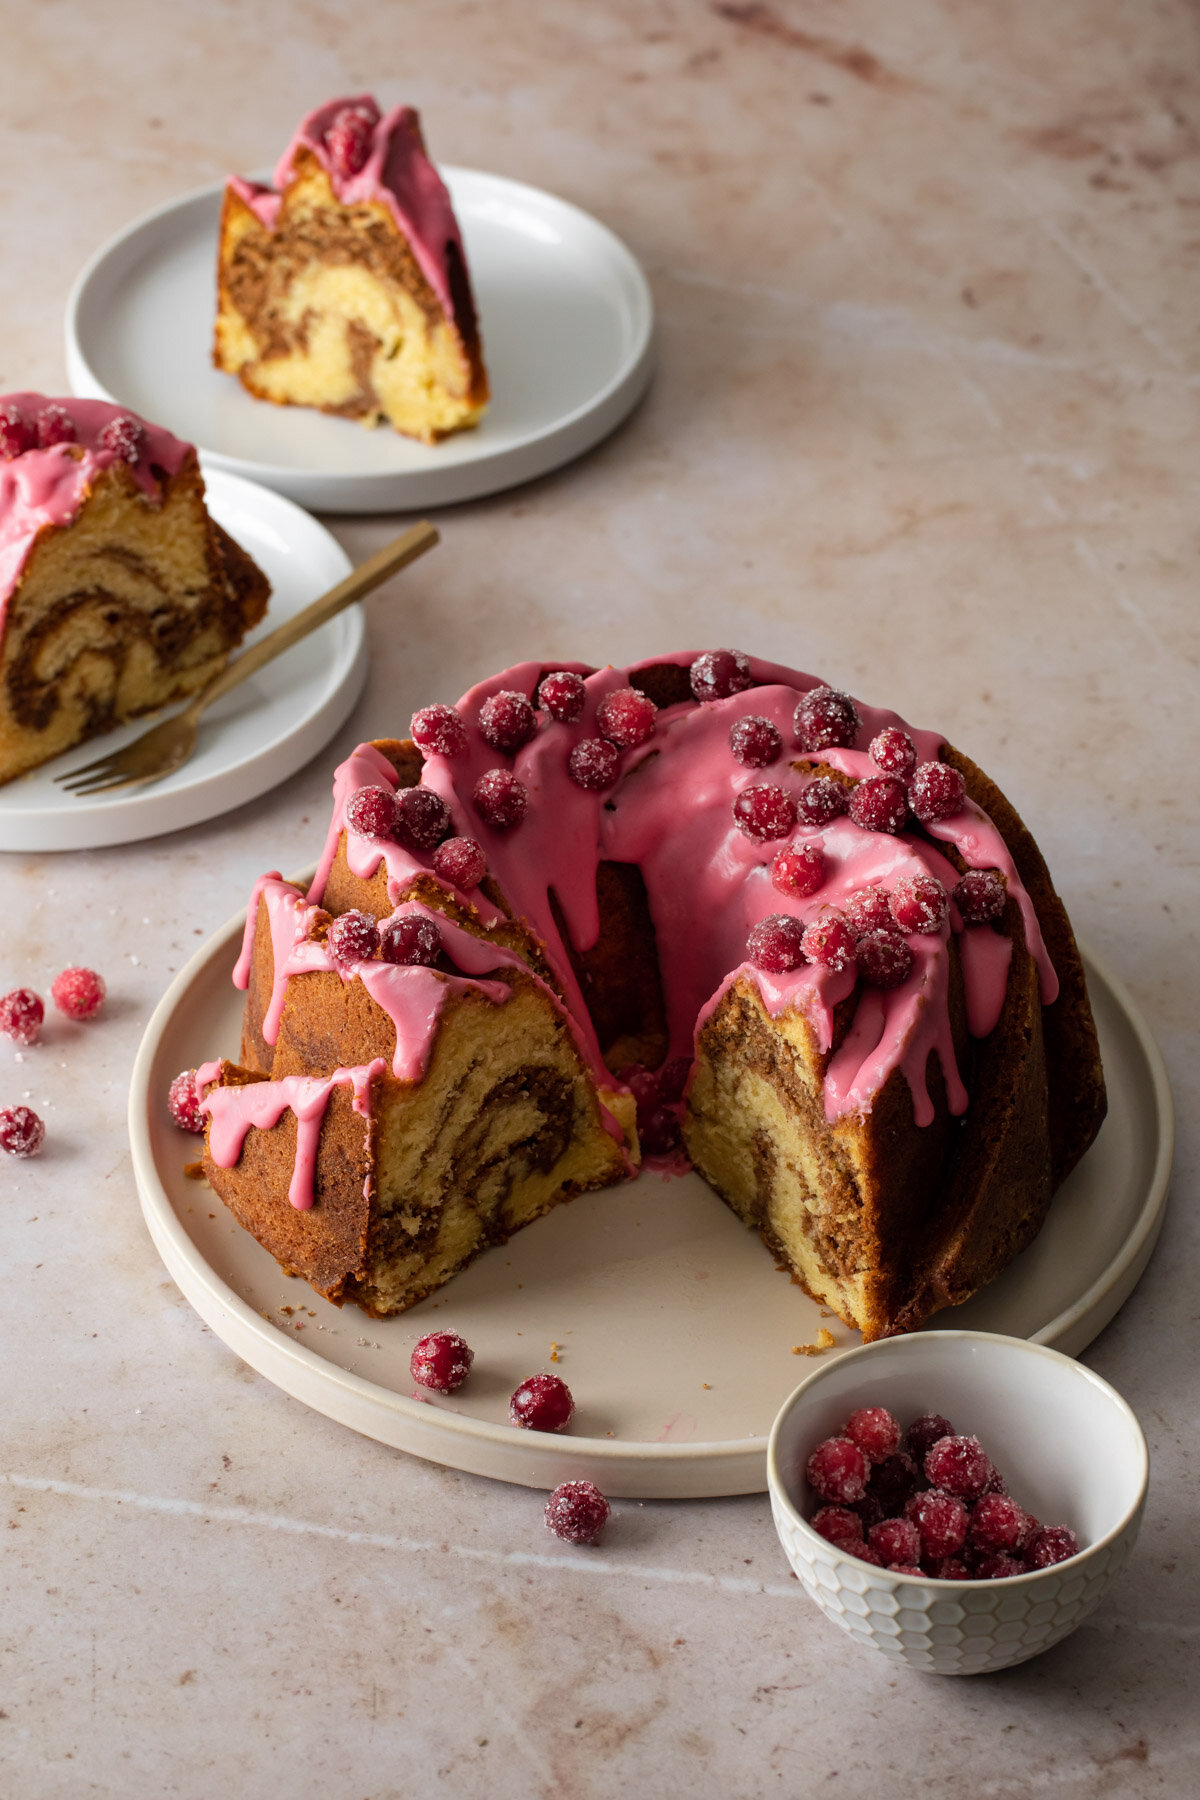 Cinnamon Swirl Bundt Cake with sugared cranberries